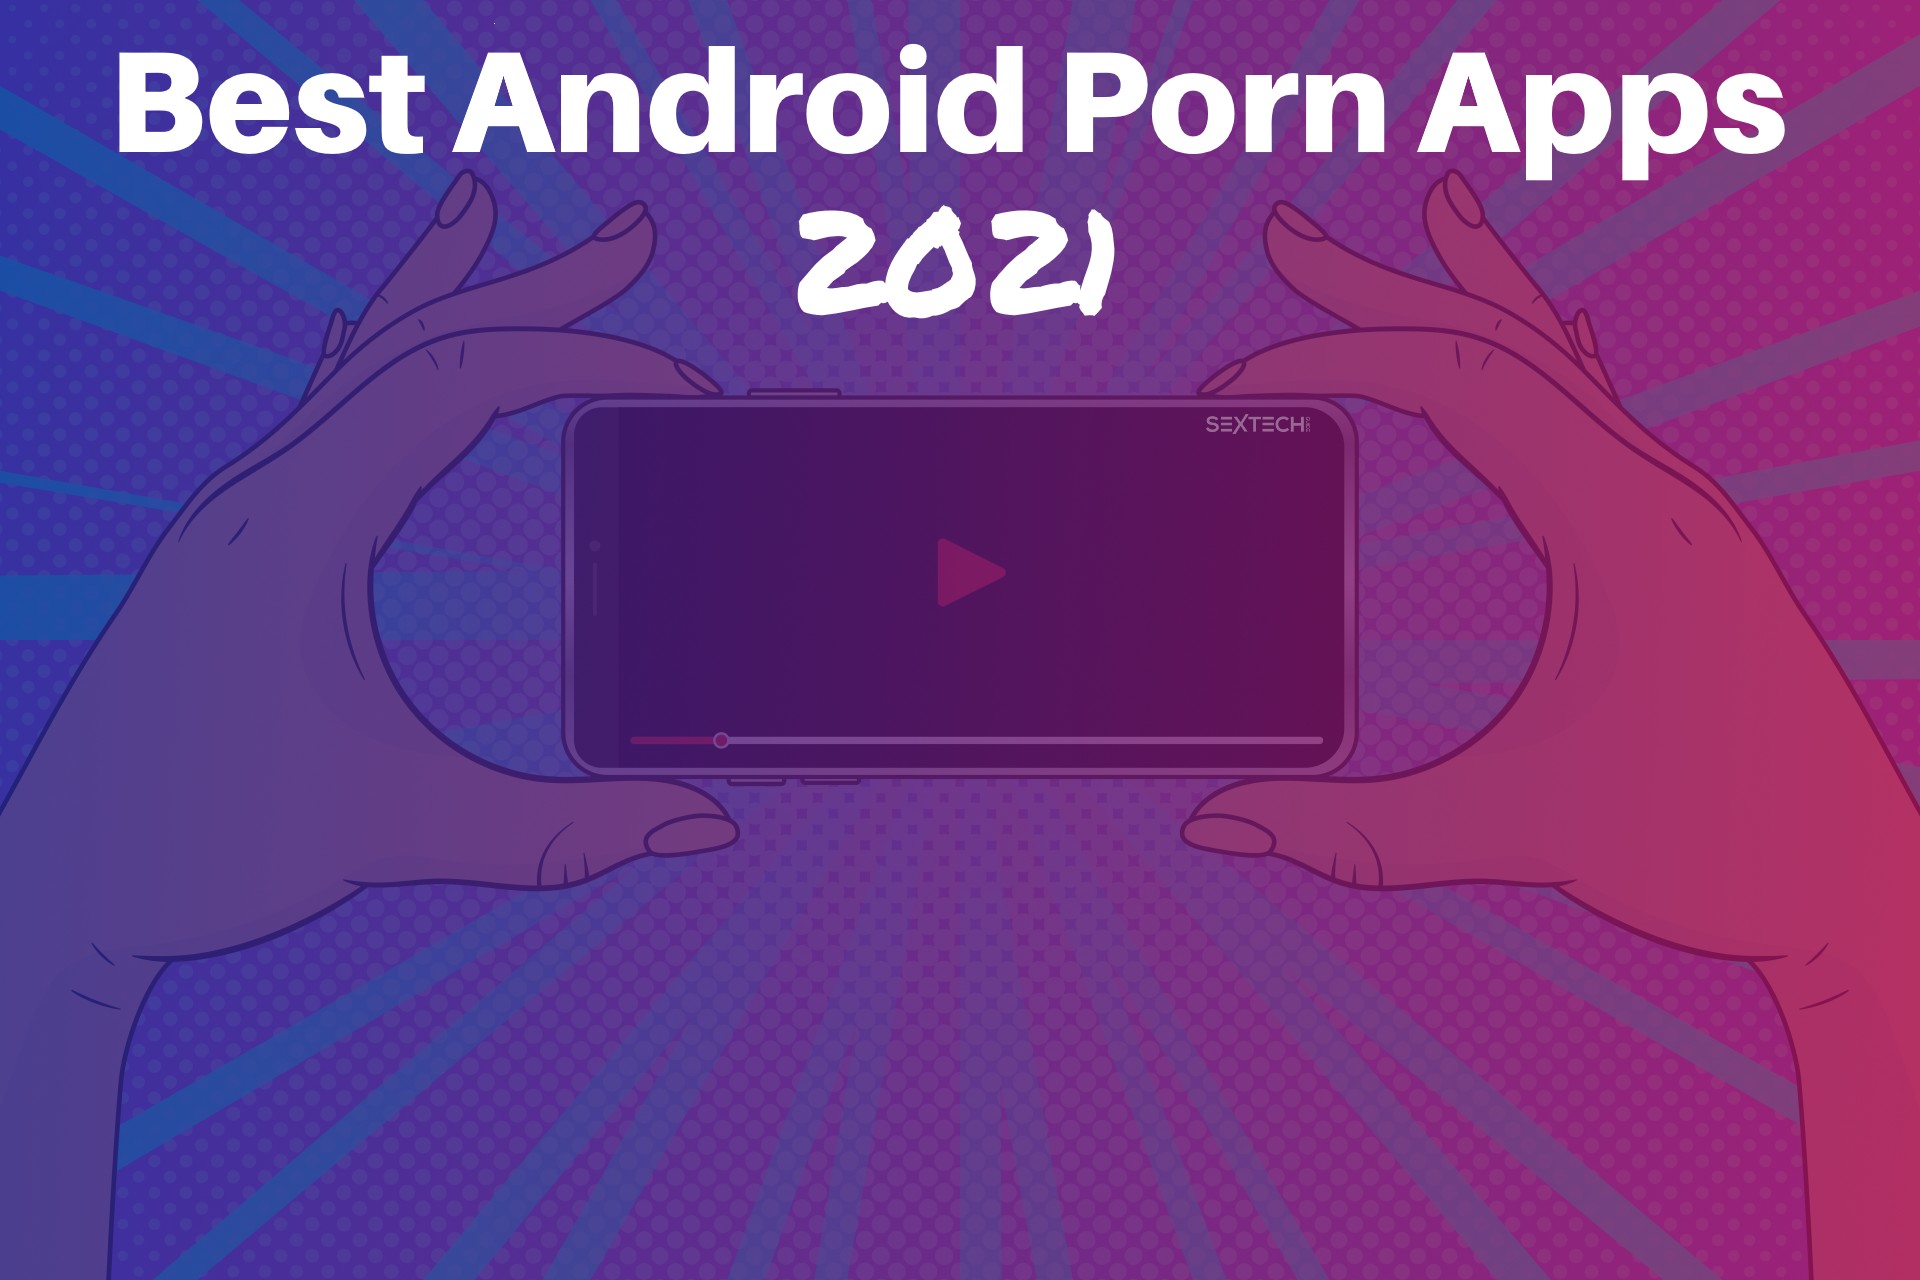 Porn websites for phone - Best porno